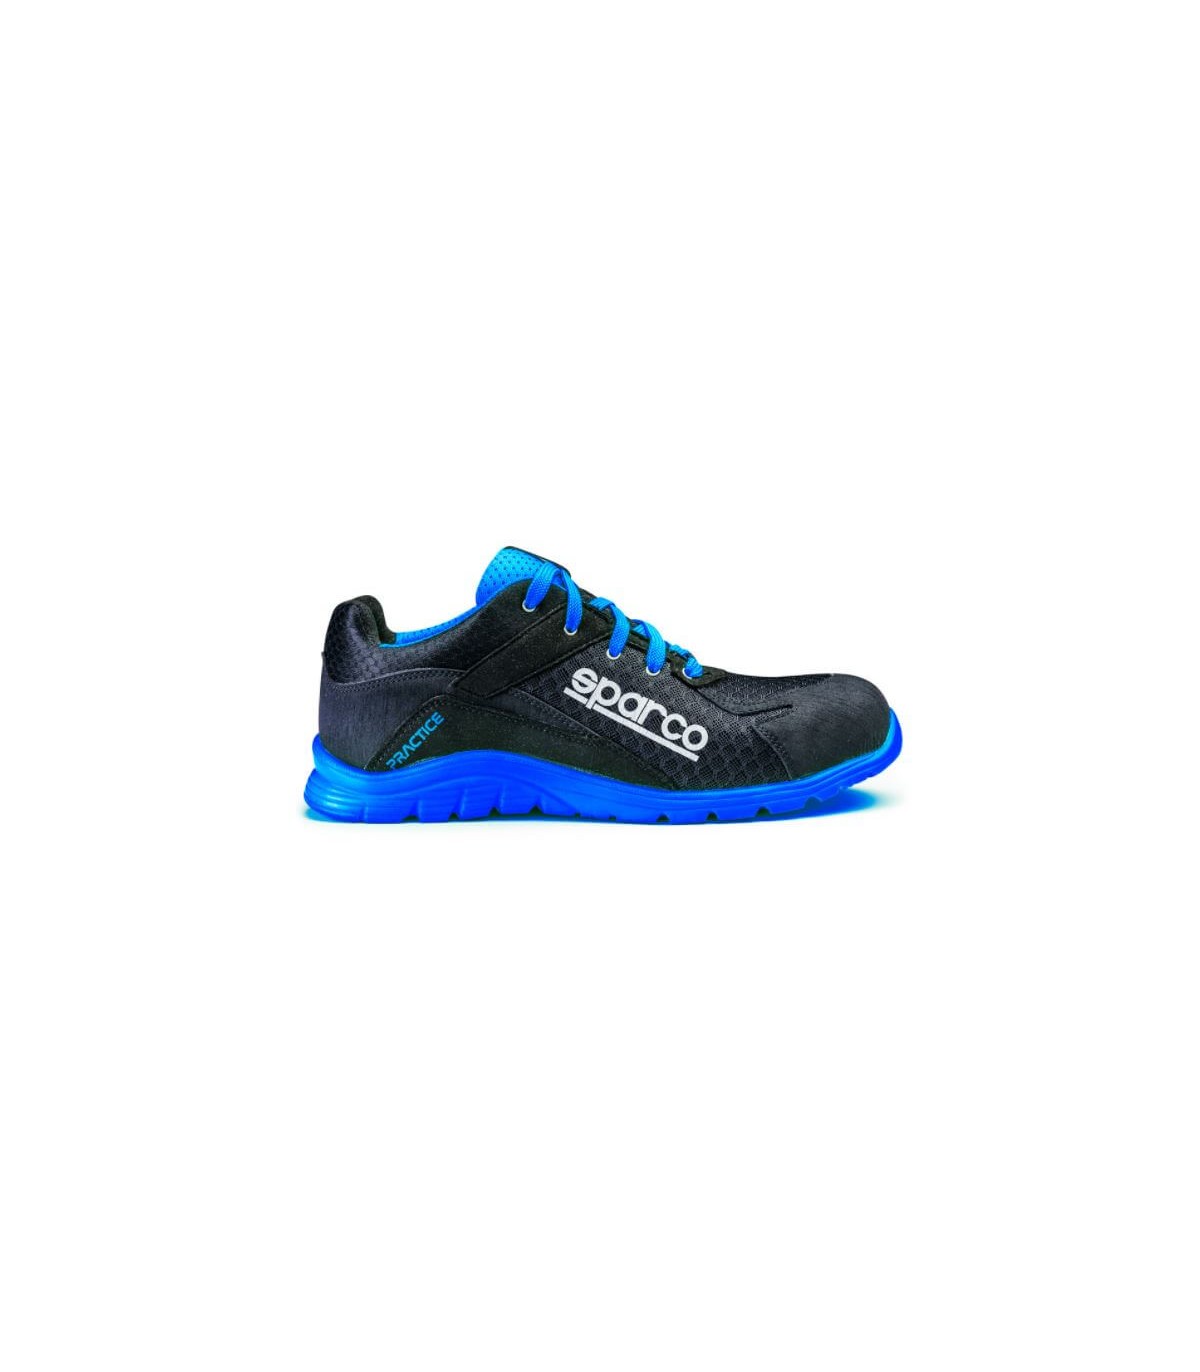 Zapatos seguridad Sparco Sport Evo S1P Azul Verde - Almacenes Cotelo